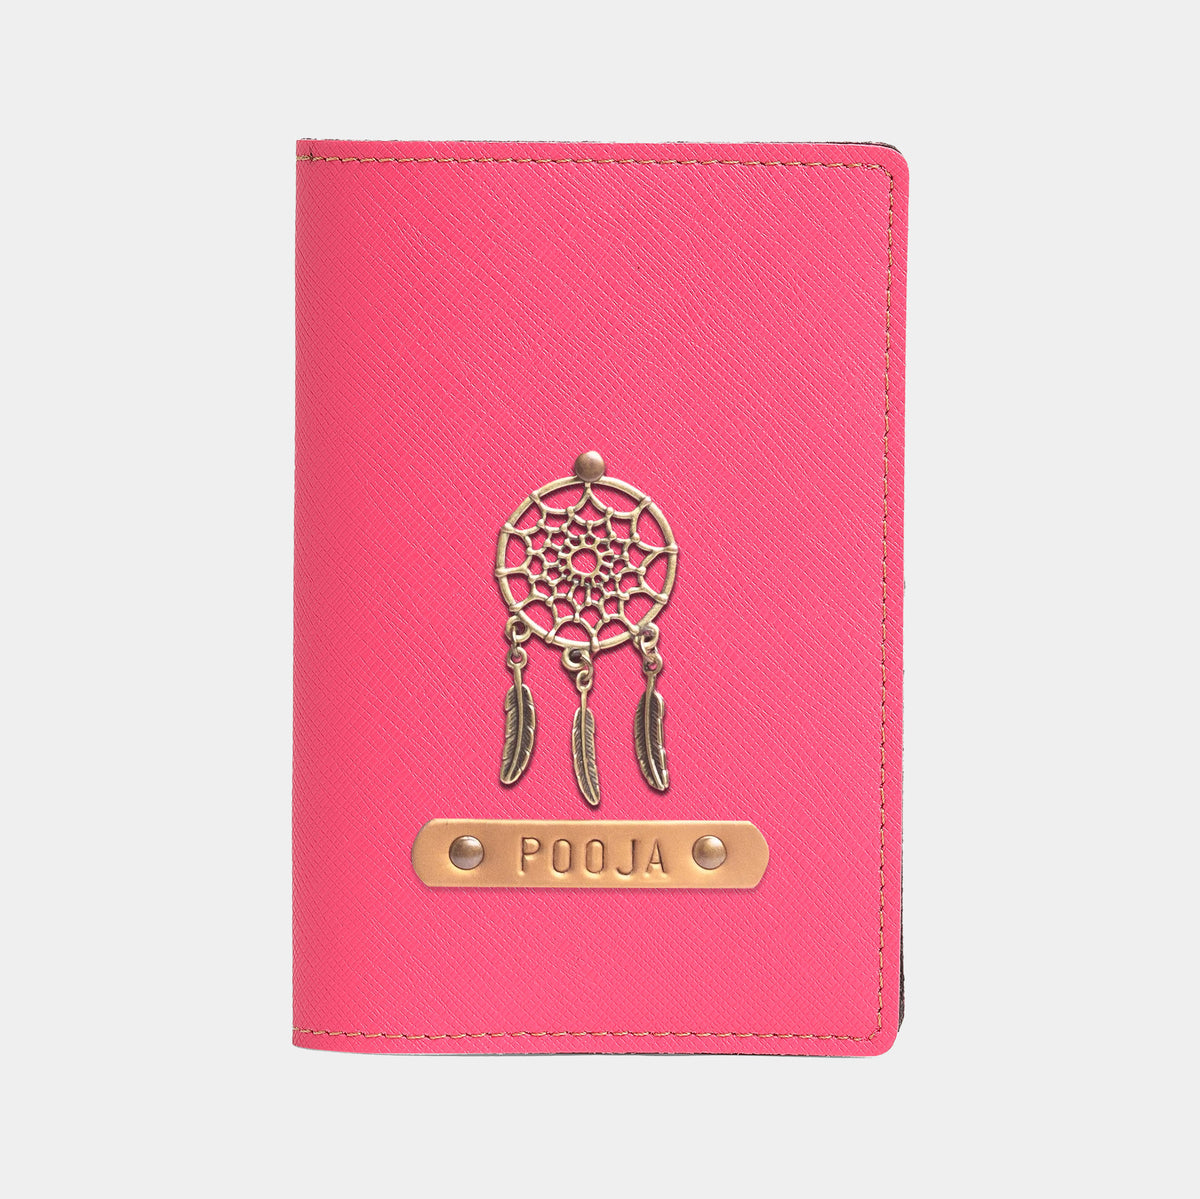 Personalized Passport Cover - Dark Pink